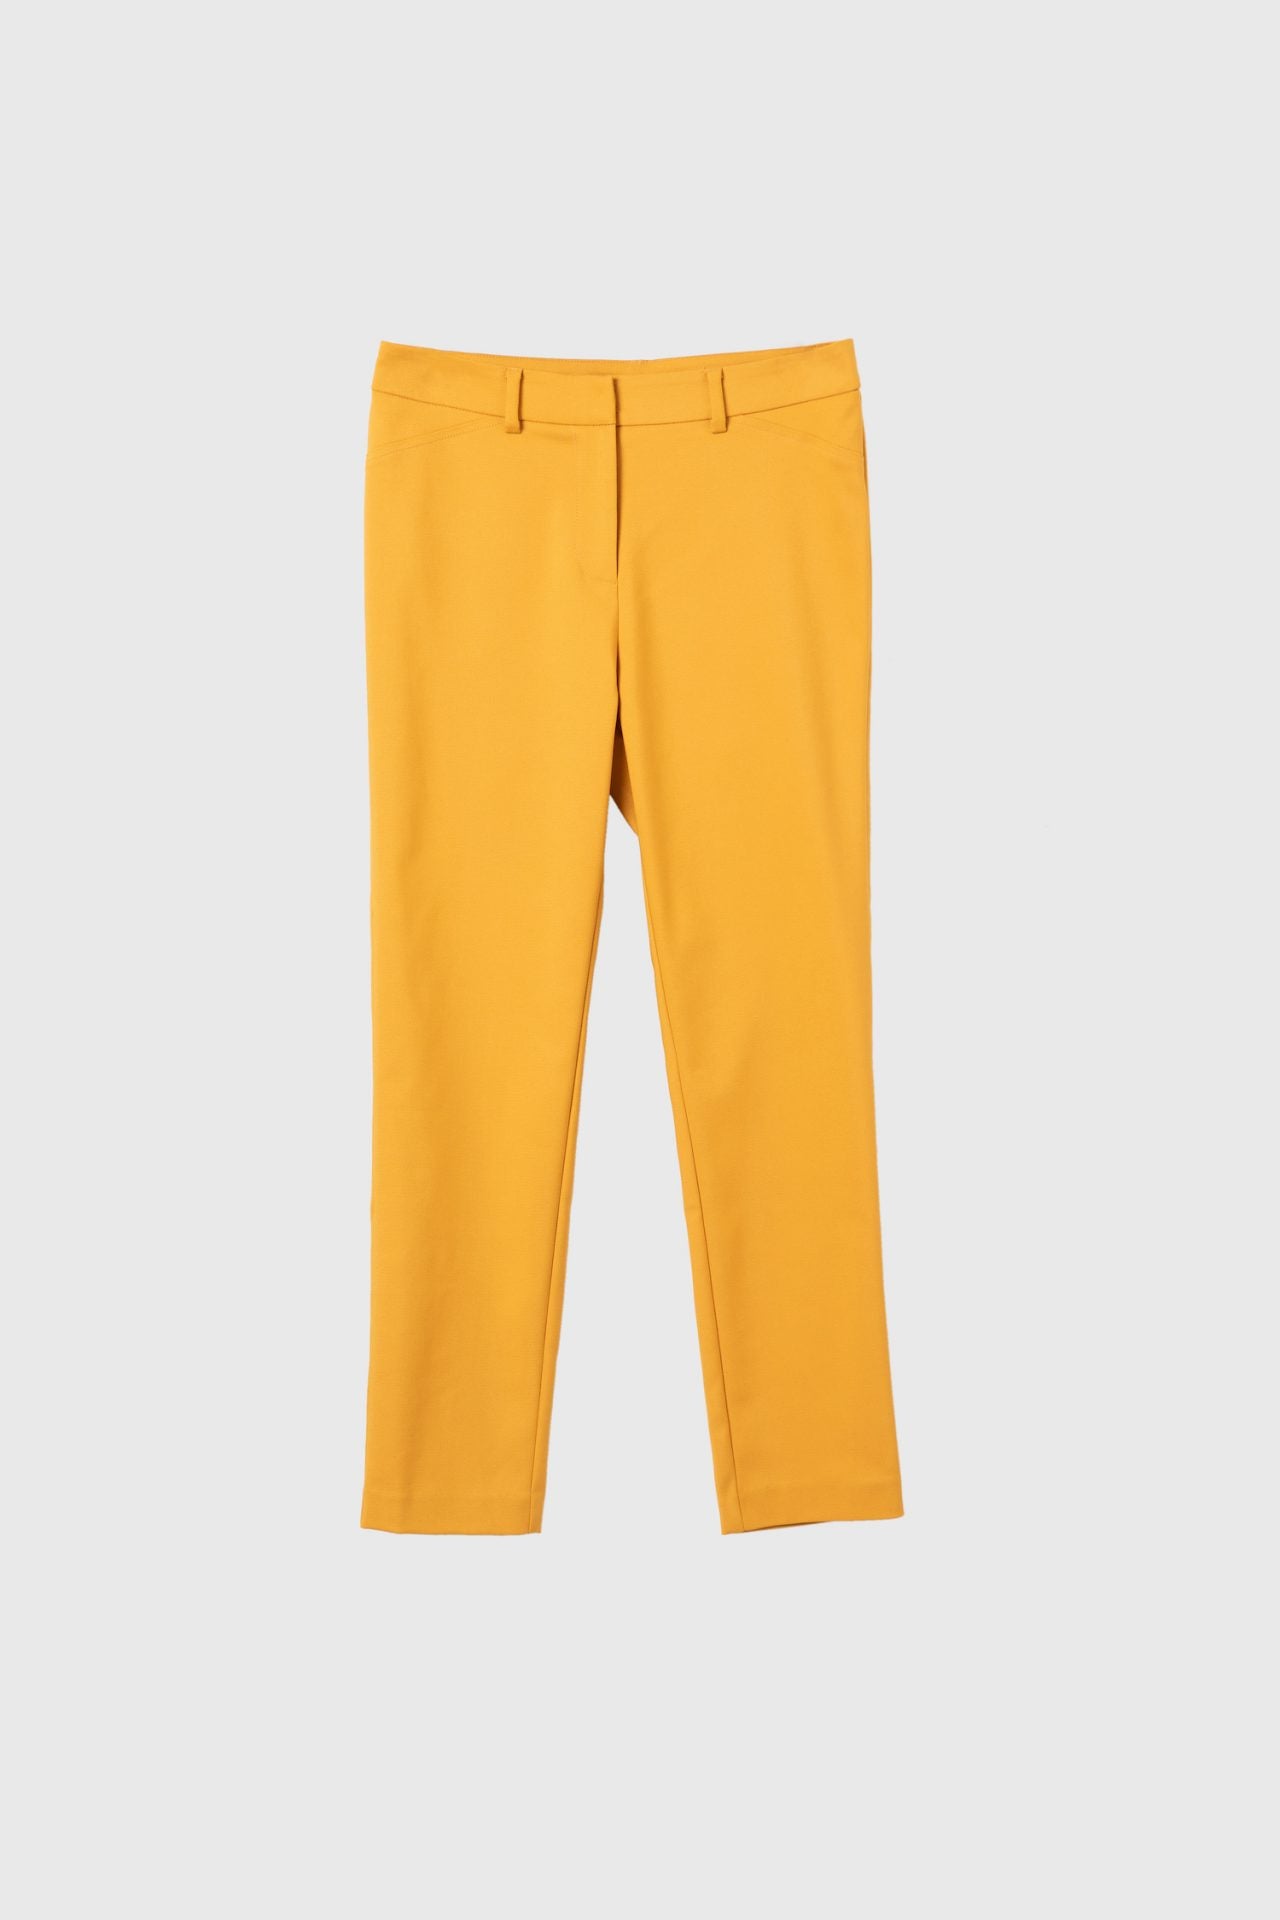 apl 1142 yellow long pants